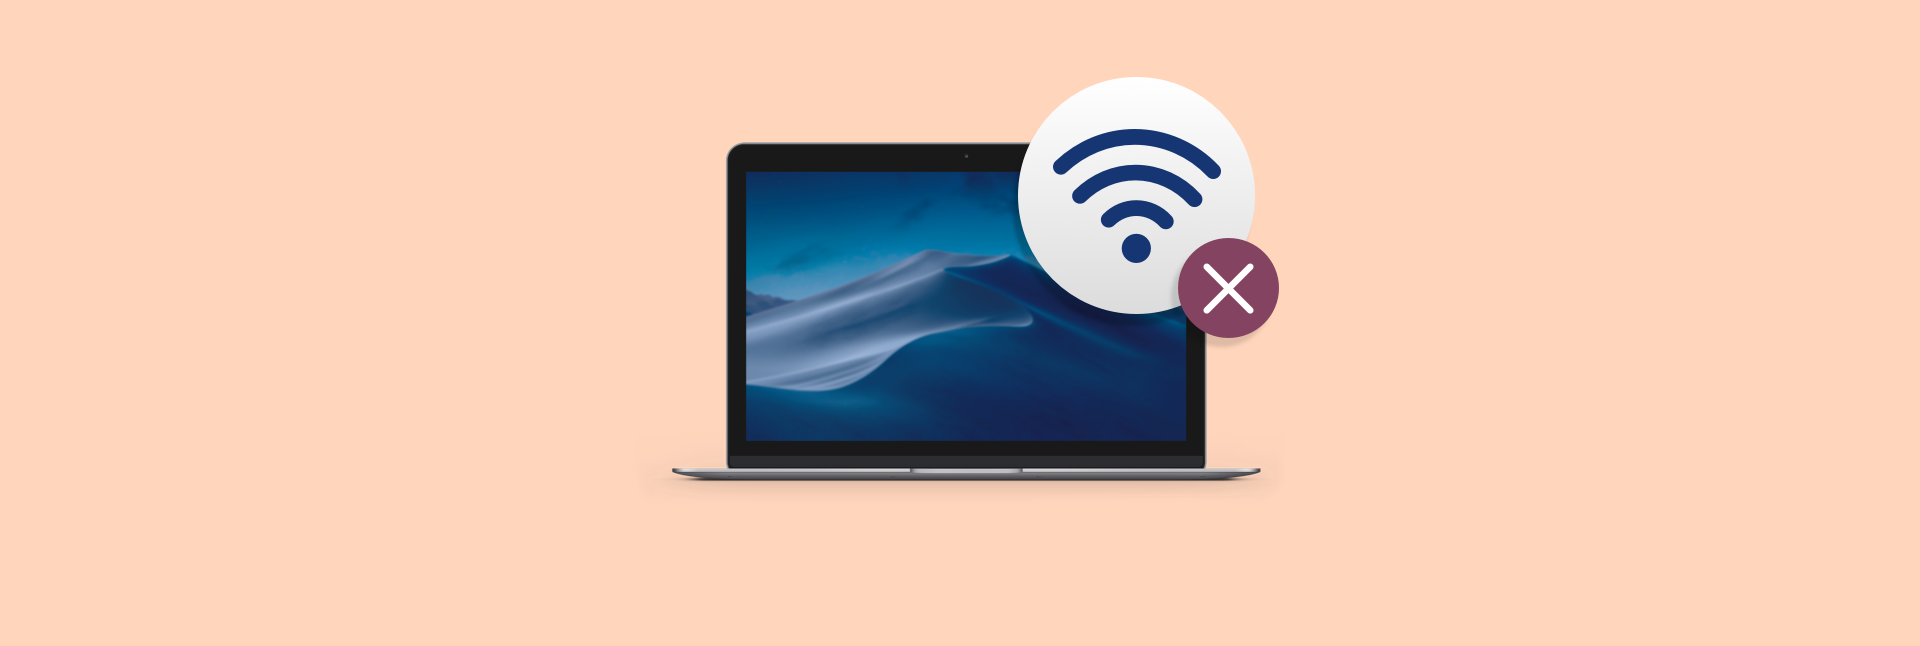 best free wi fi explorer for mac